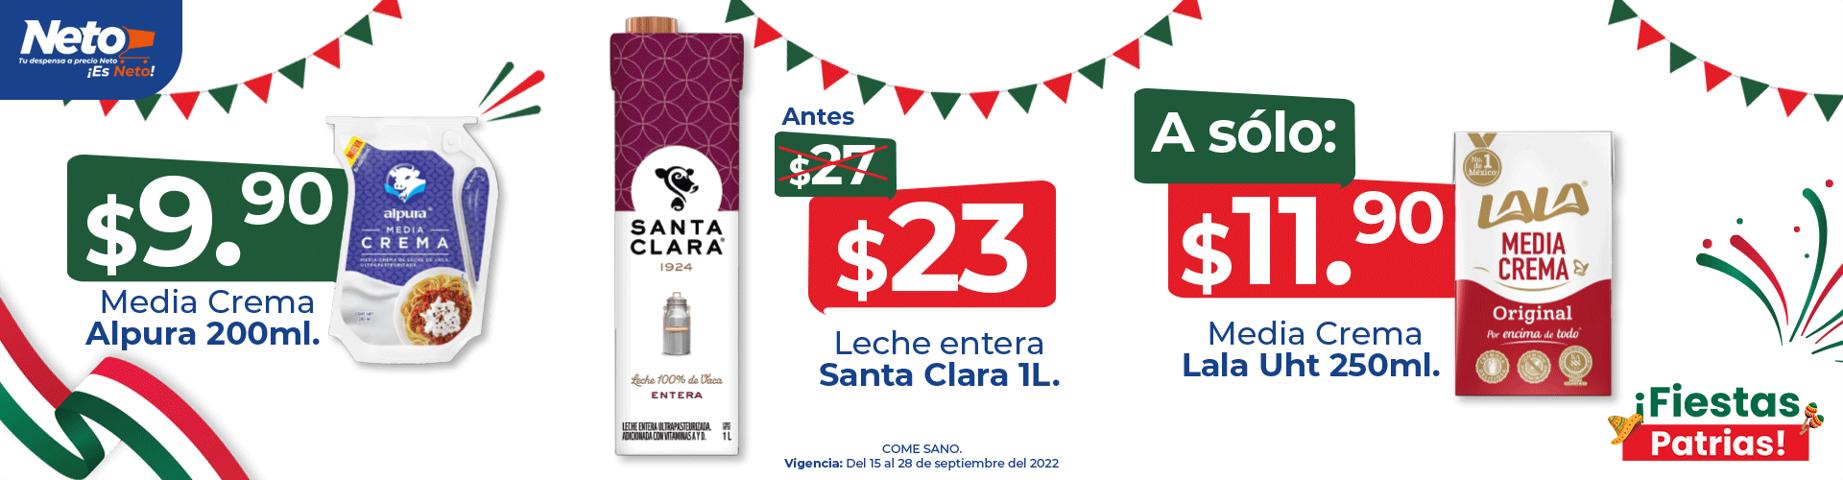 Ofertas de Hiper-Supermercados en Tlaxcala de Xicohténcatl | Ofertas Tiendas Neto de Tiendas Neto | 15/9/2022 - 28/9/2022